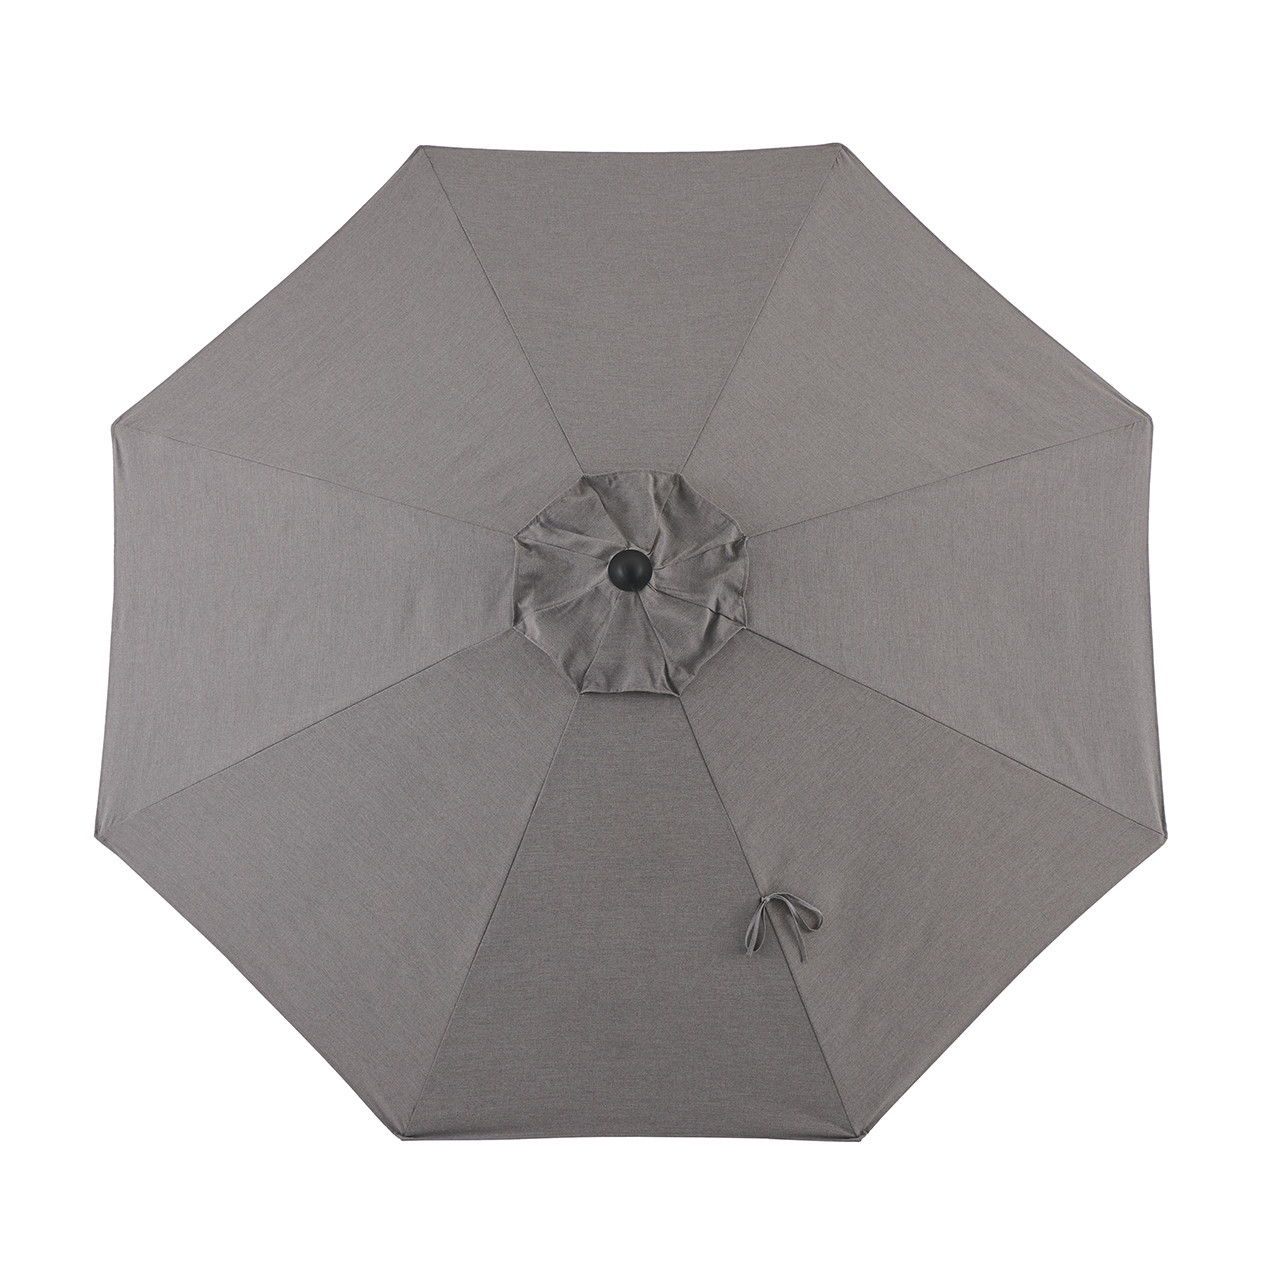 Tempo 9 ft. Greyish Canopy with Black Aluminum Single Wind Vent Market Umbrella